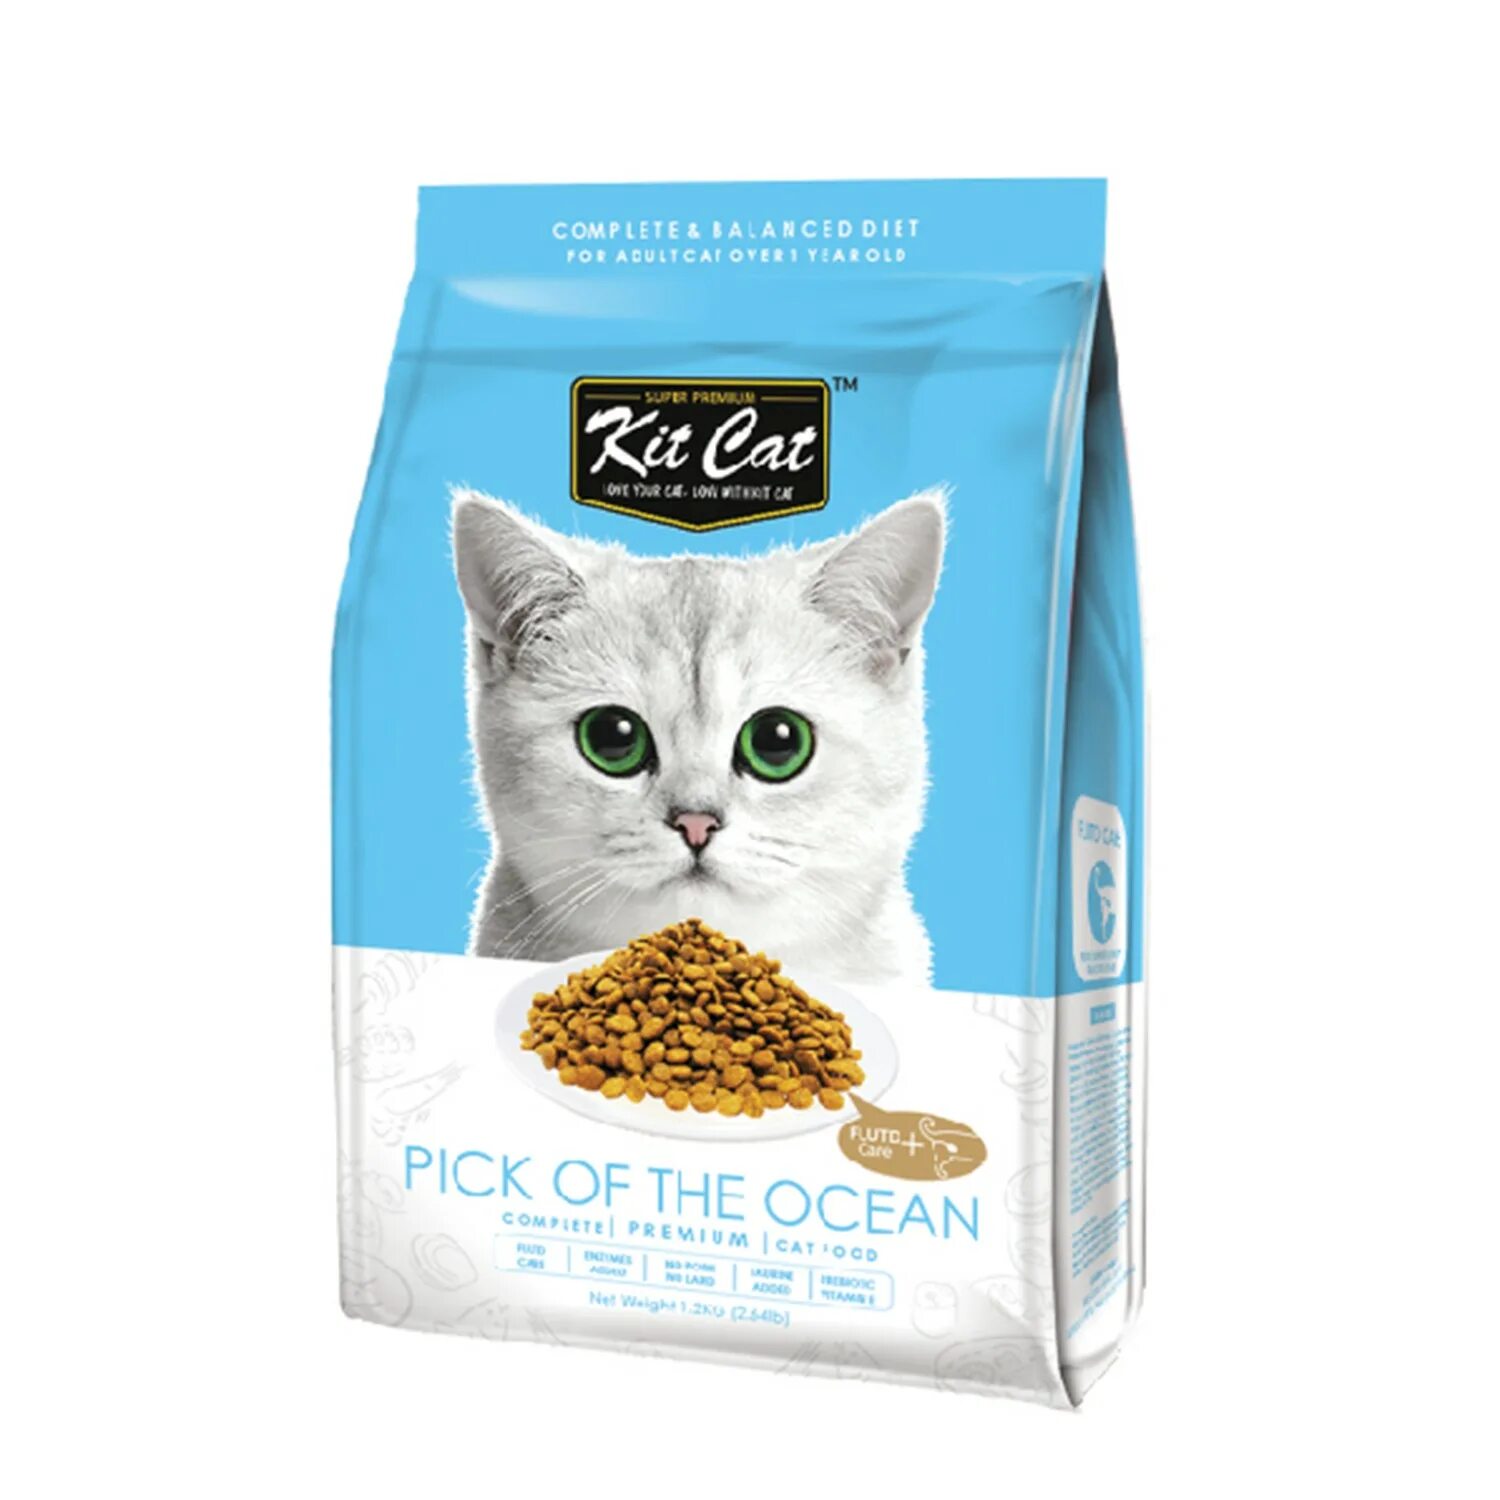 Корм. Корм для кошек. Пакет корма для кошек. Cat food корм для кошек. Корм для котов в пакетах